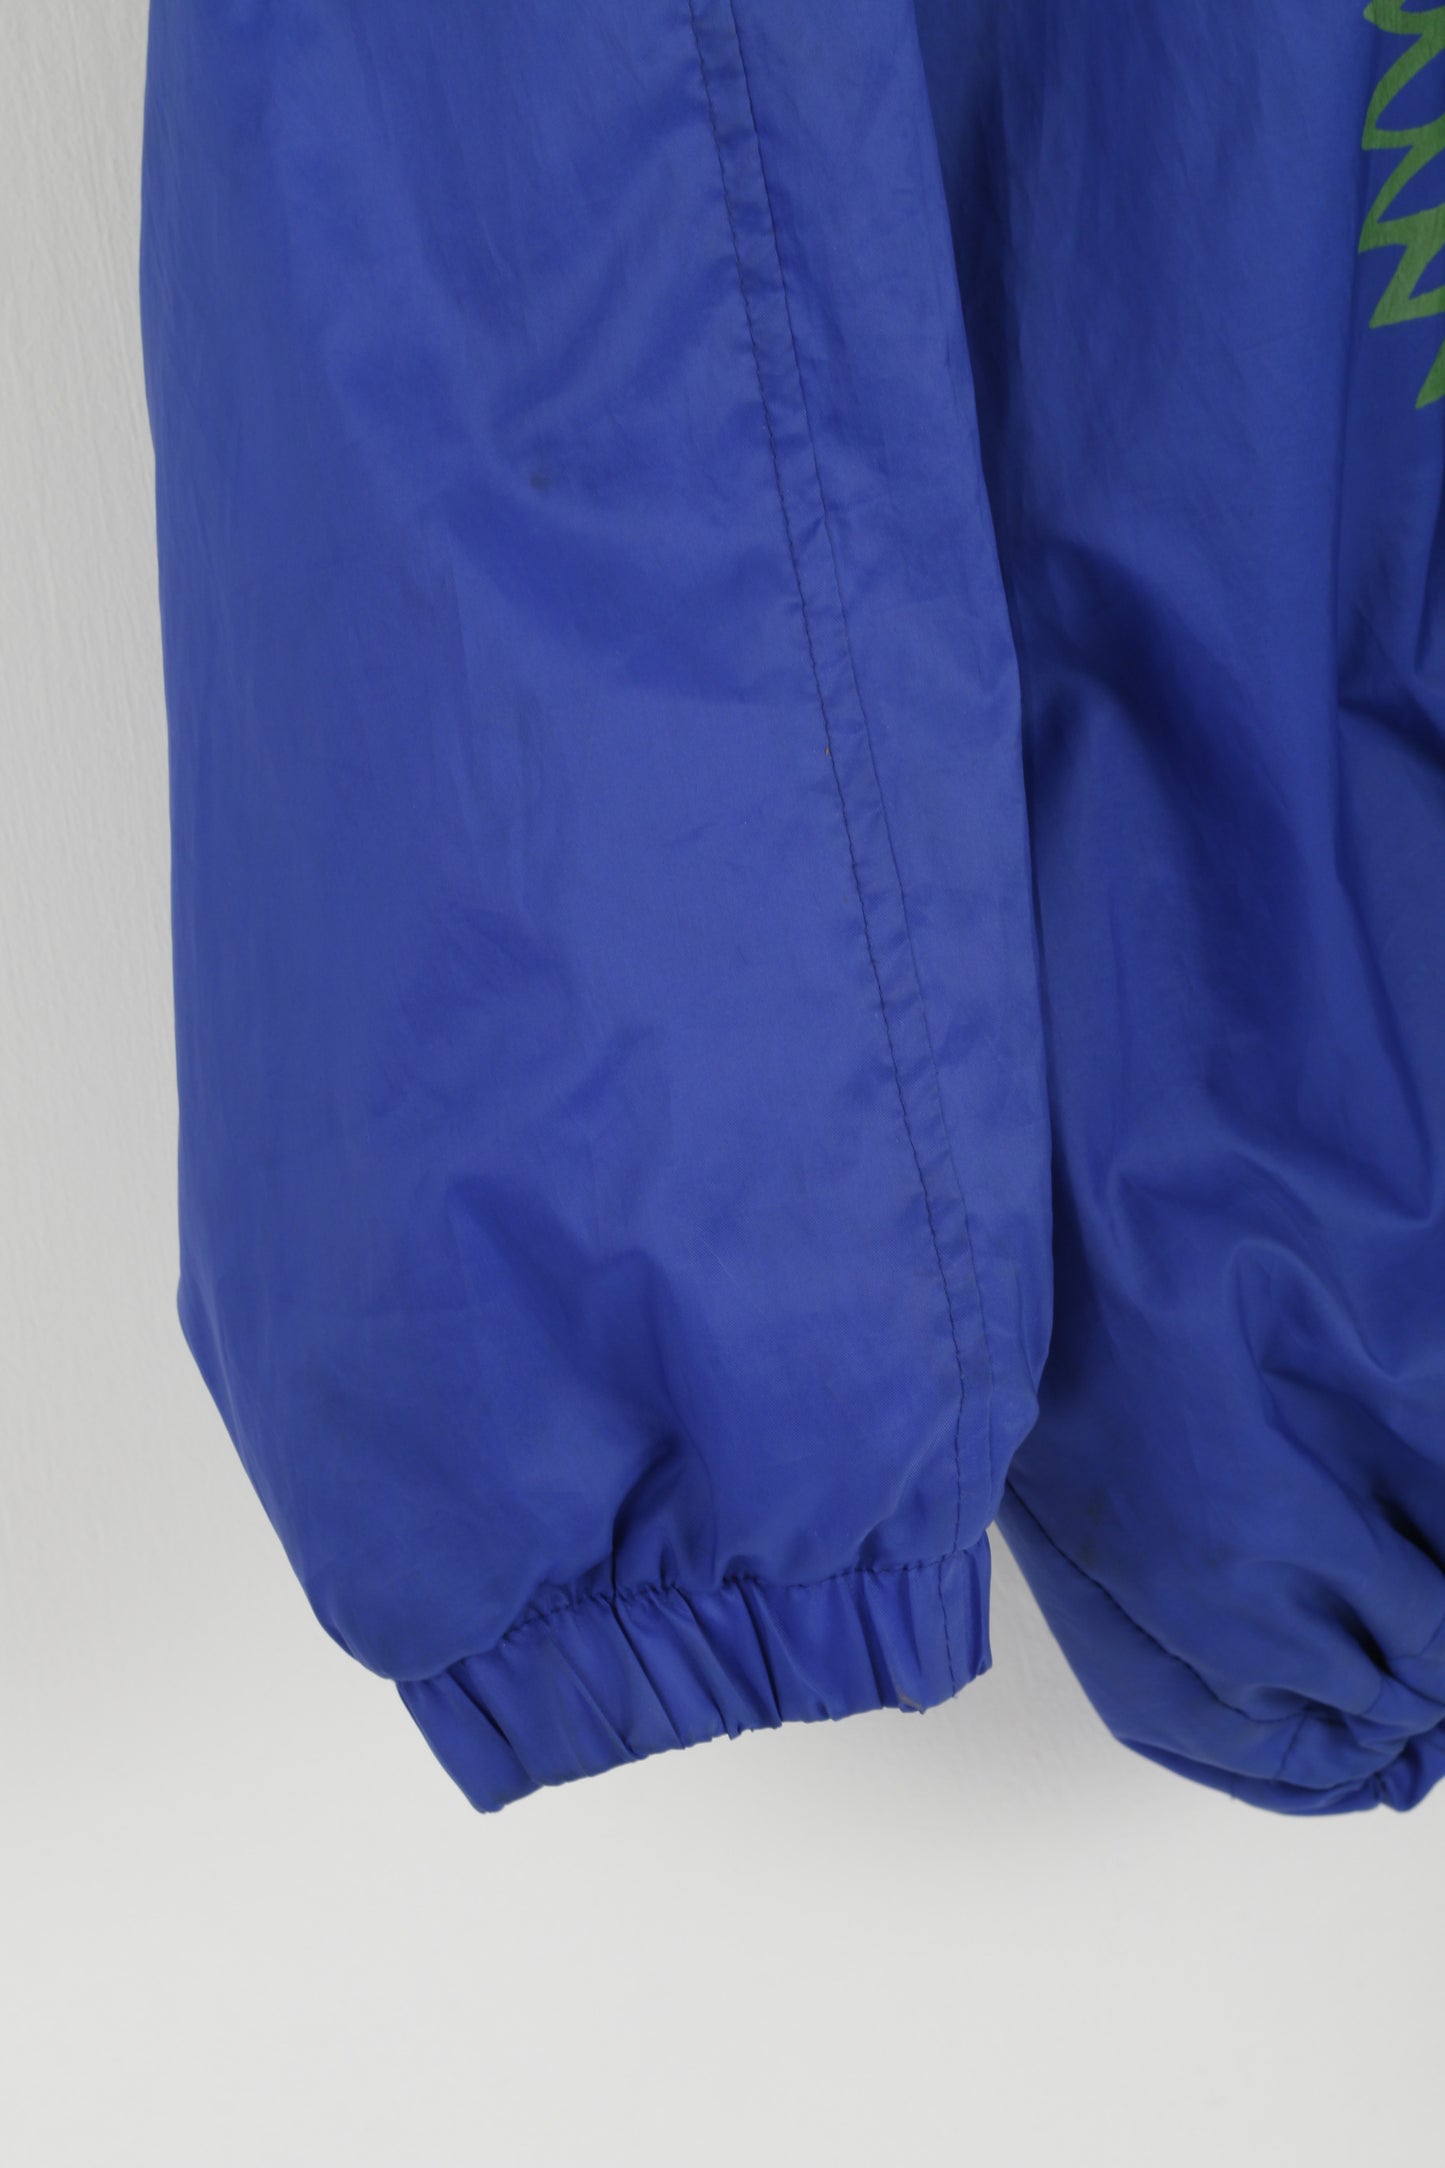 Snow Boarding Fun Men XL Jacket Pullover Blue Zip Neck Cotton Lined Retro Top